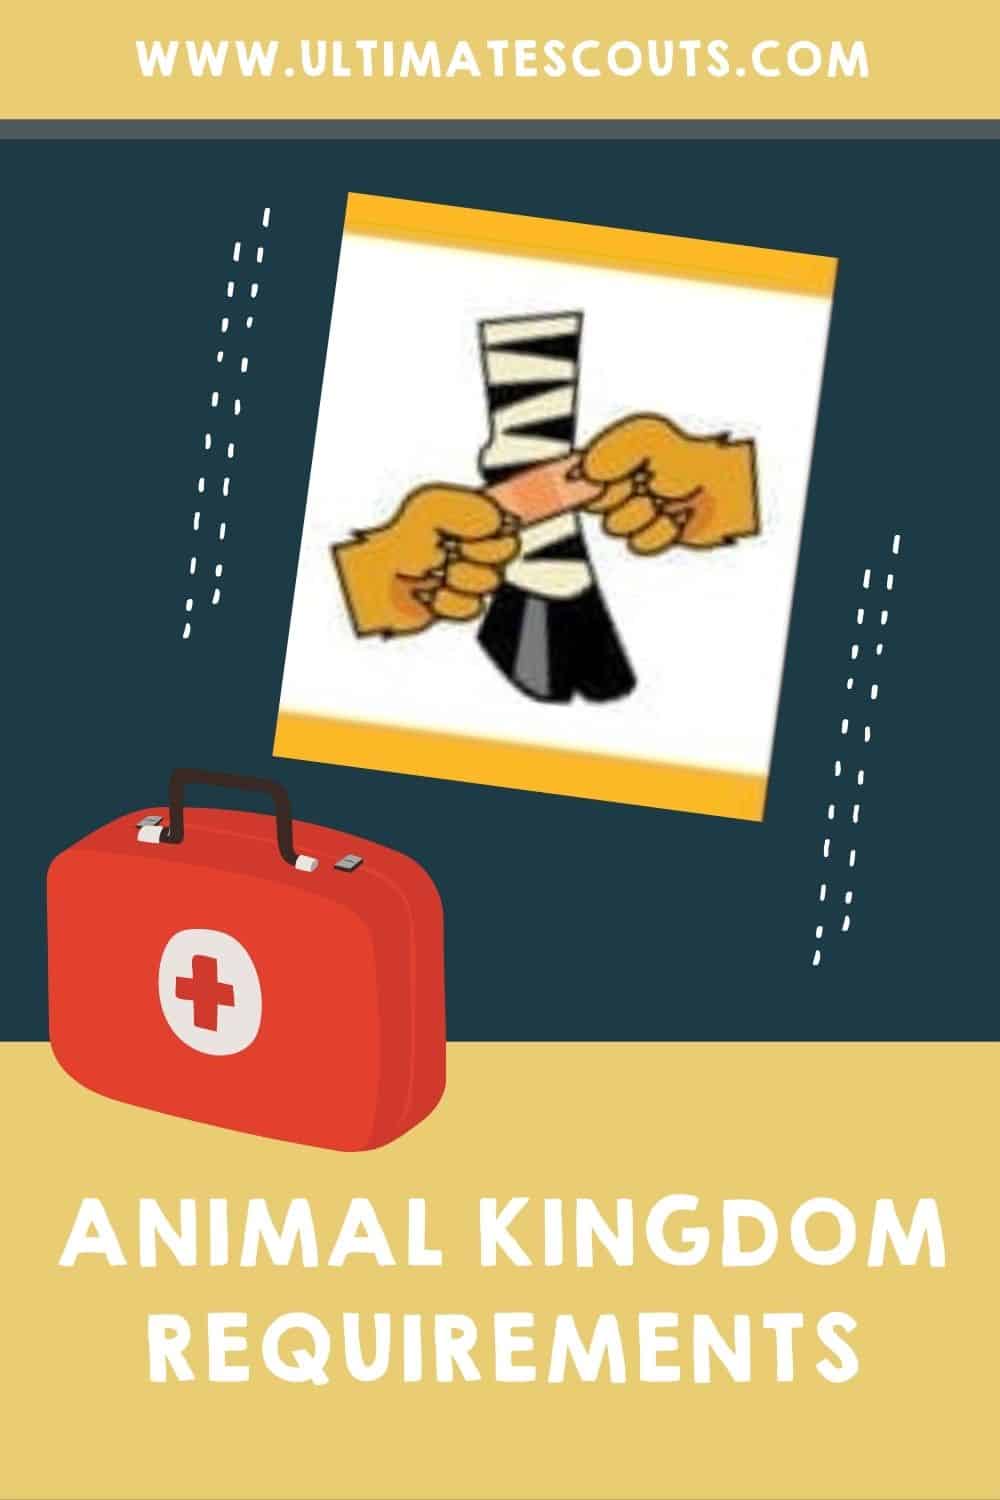 Animal Kingdom for Cub Scouts